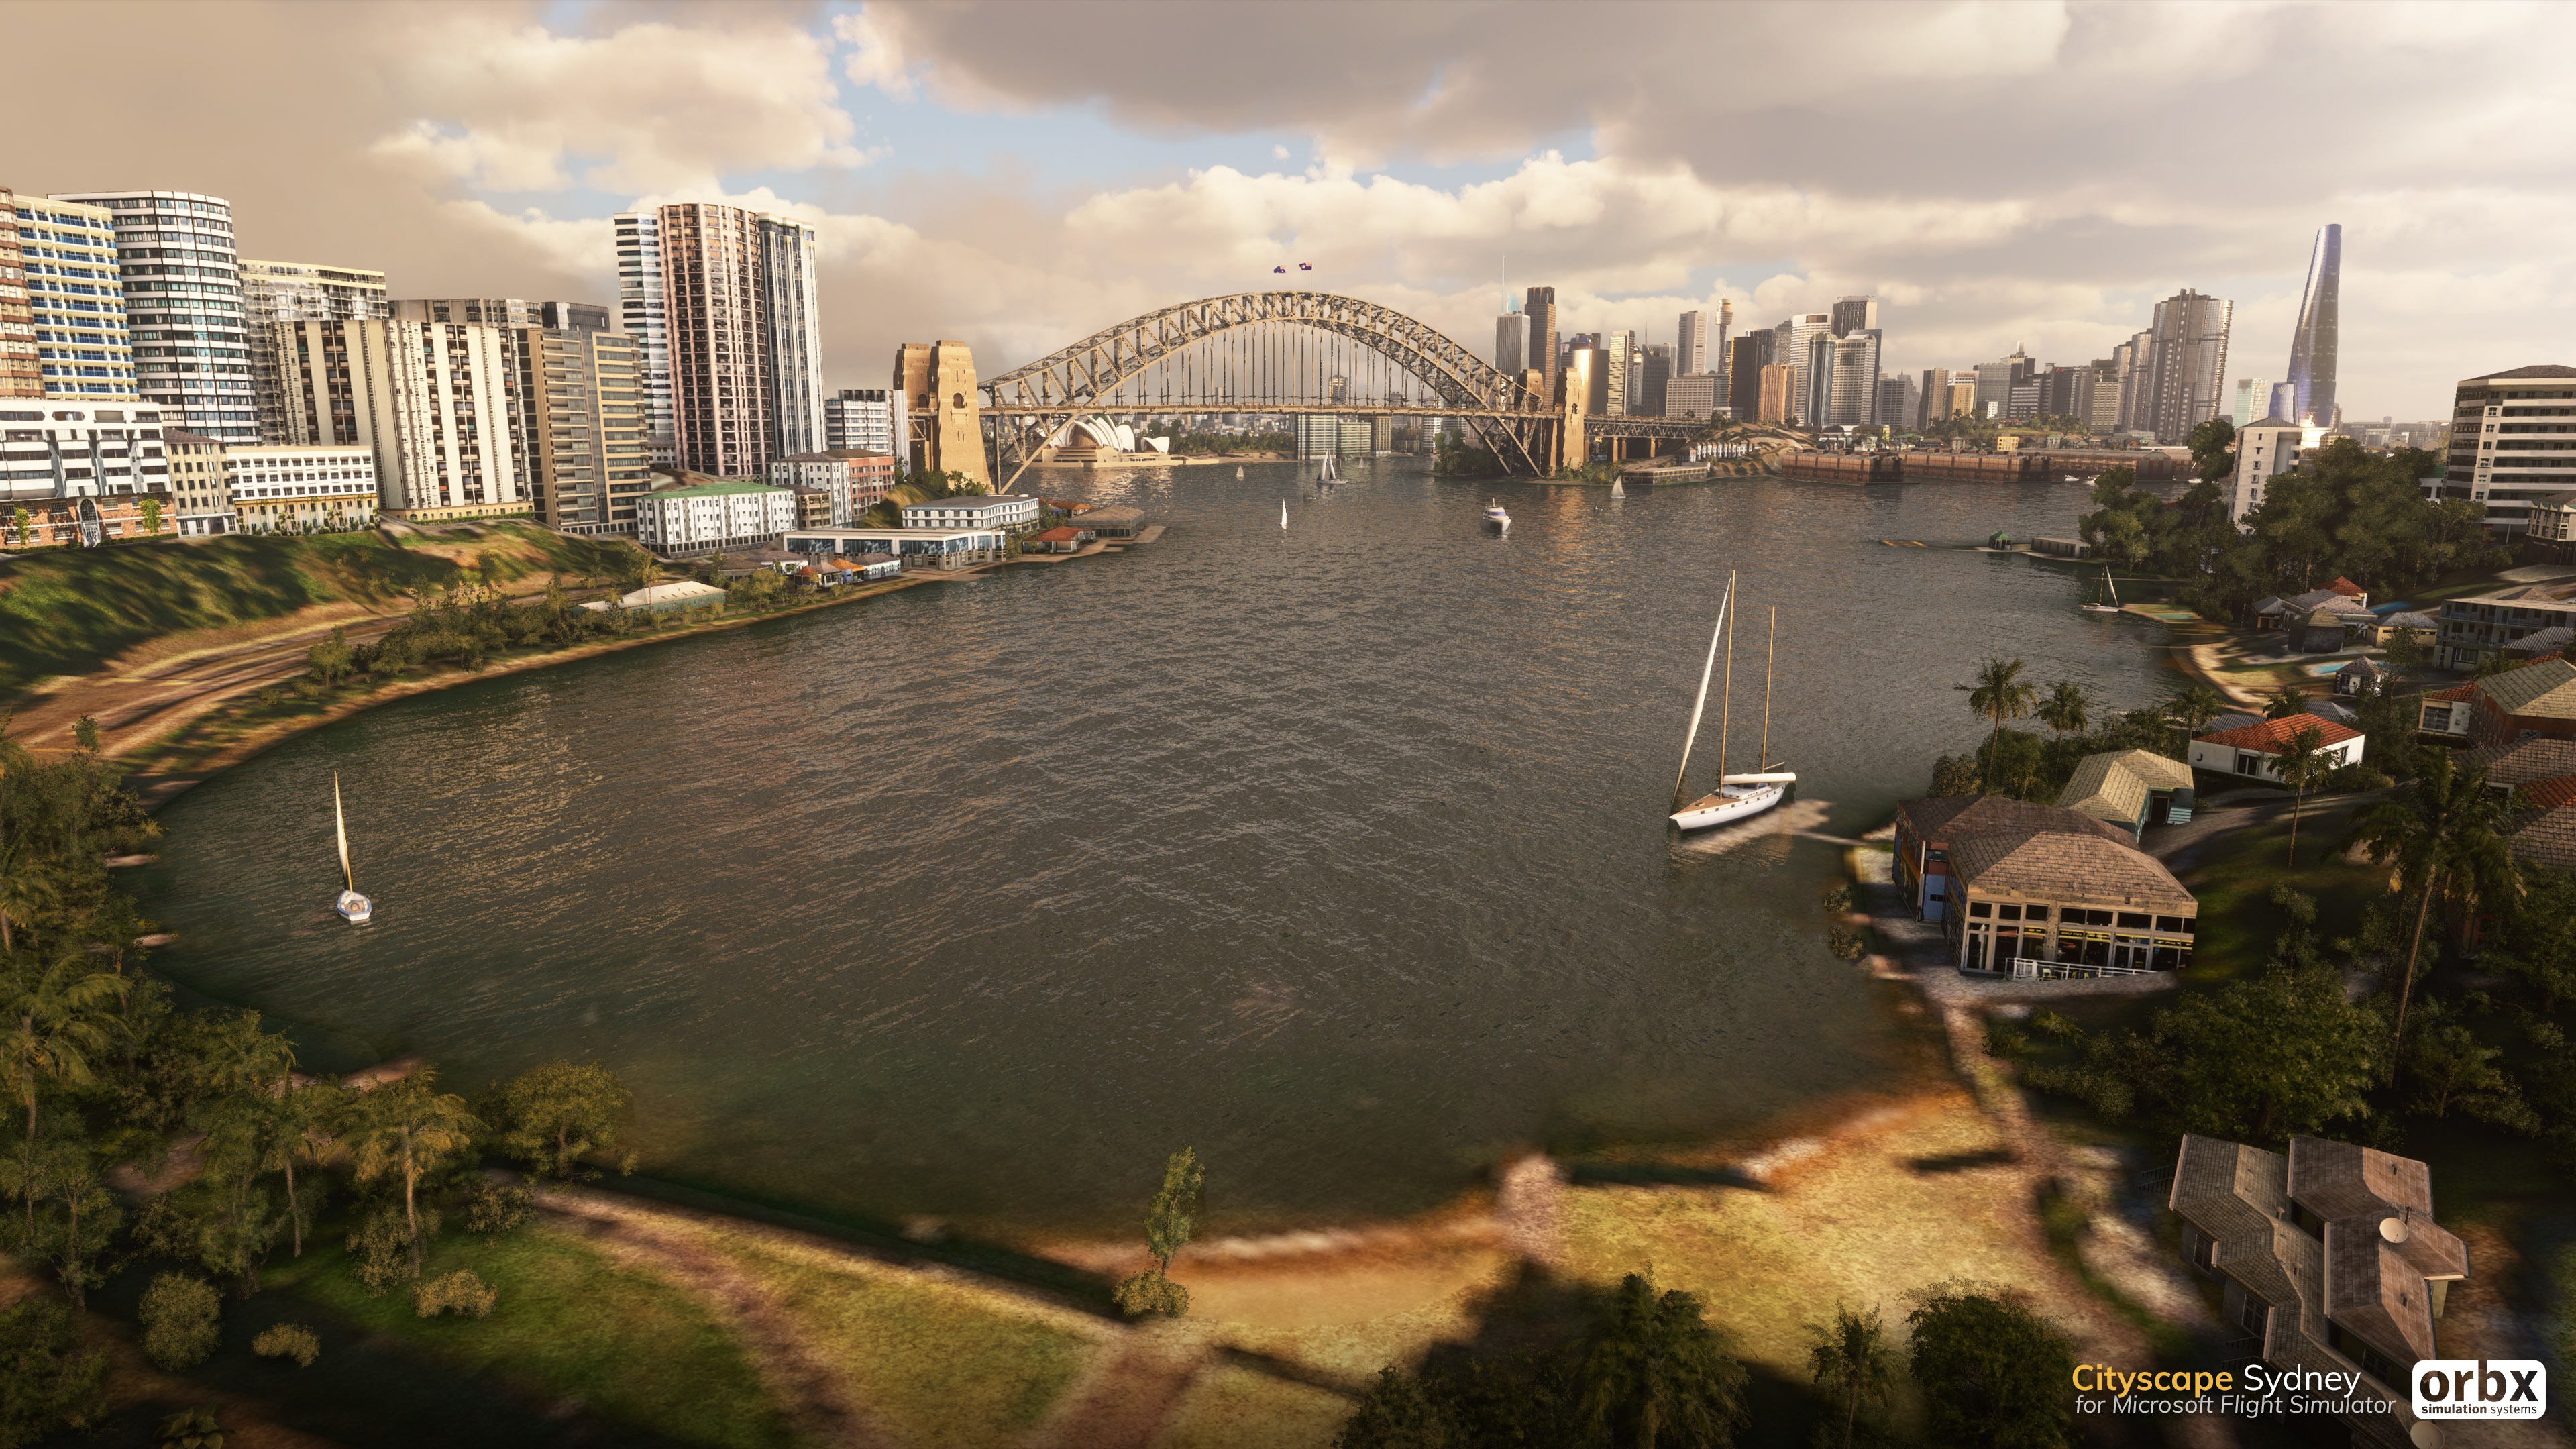 Orbx Announces Cityscape Sydney for Microsoft Flight Simulator